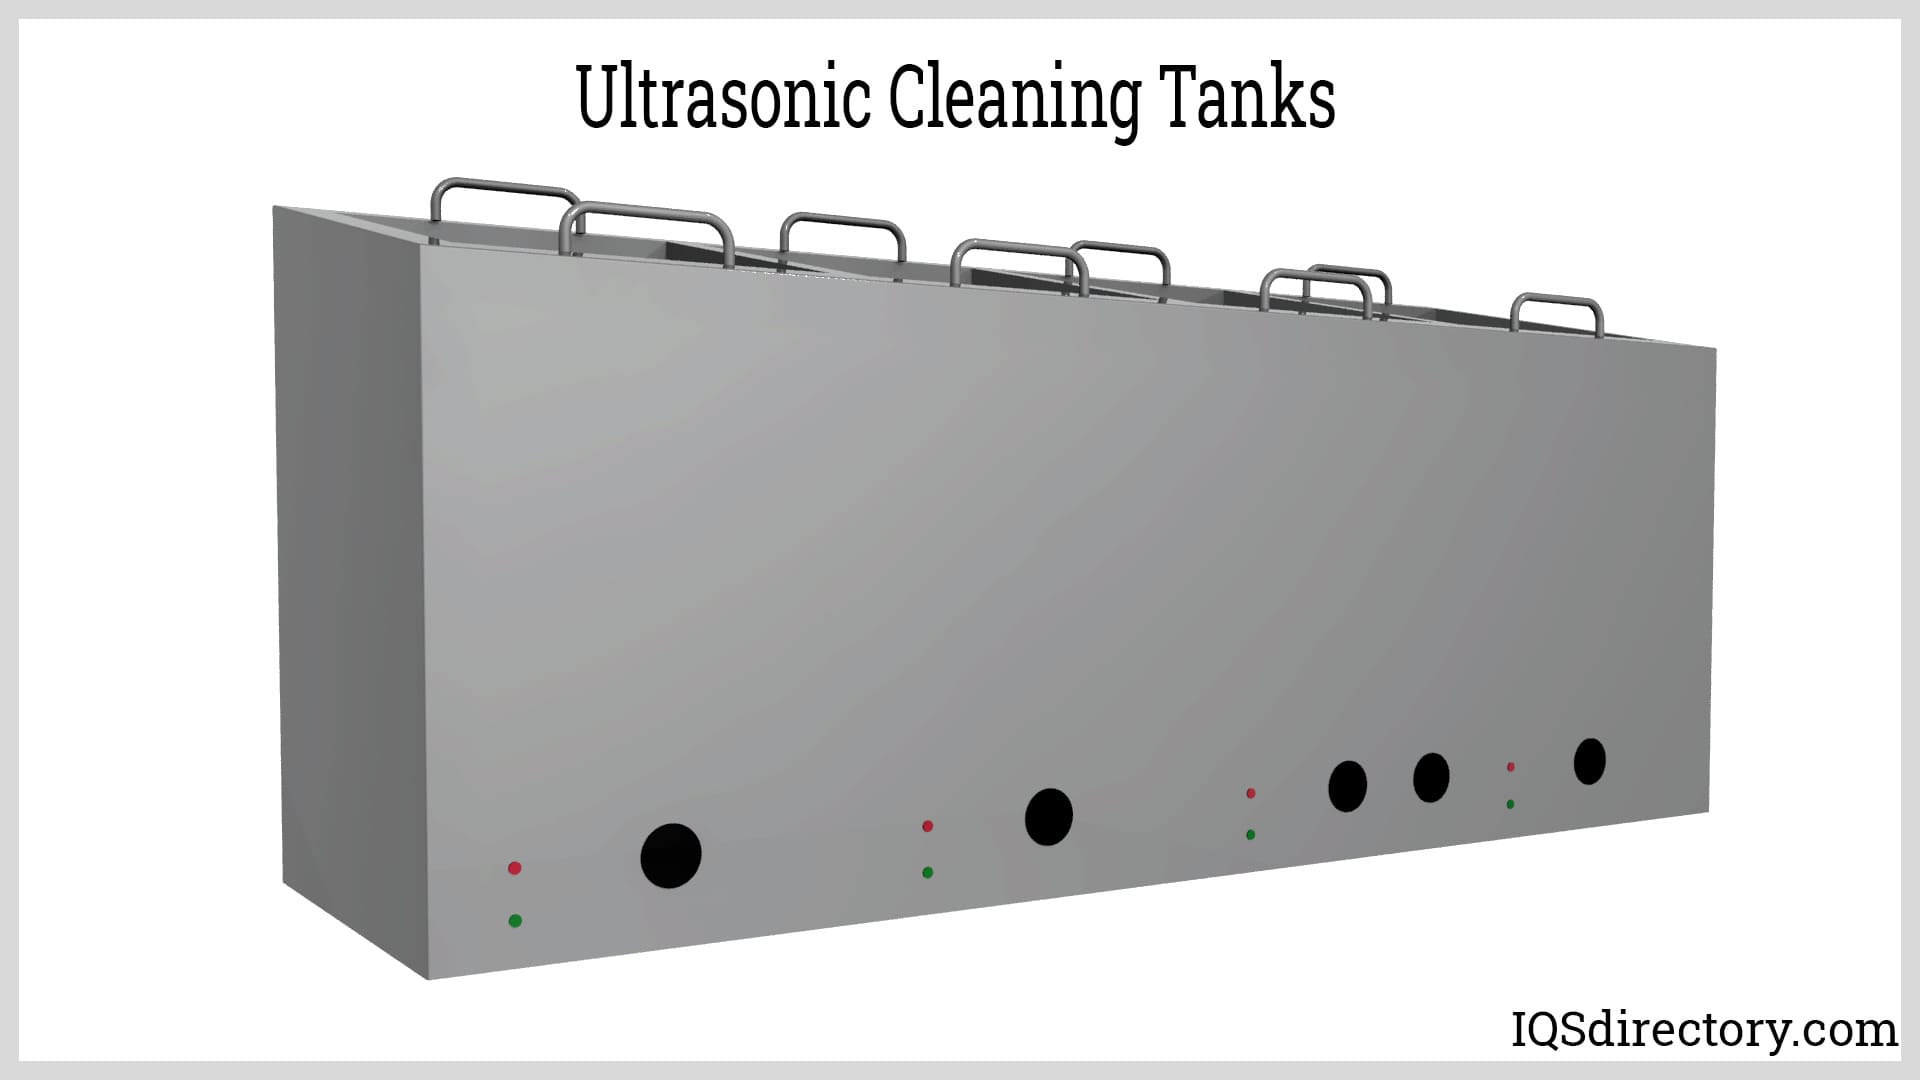 Ultrasonic Cleaning Tanks